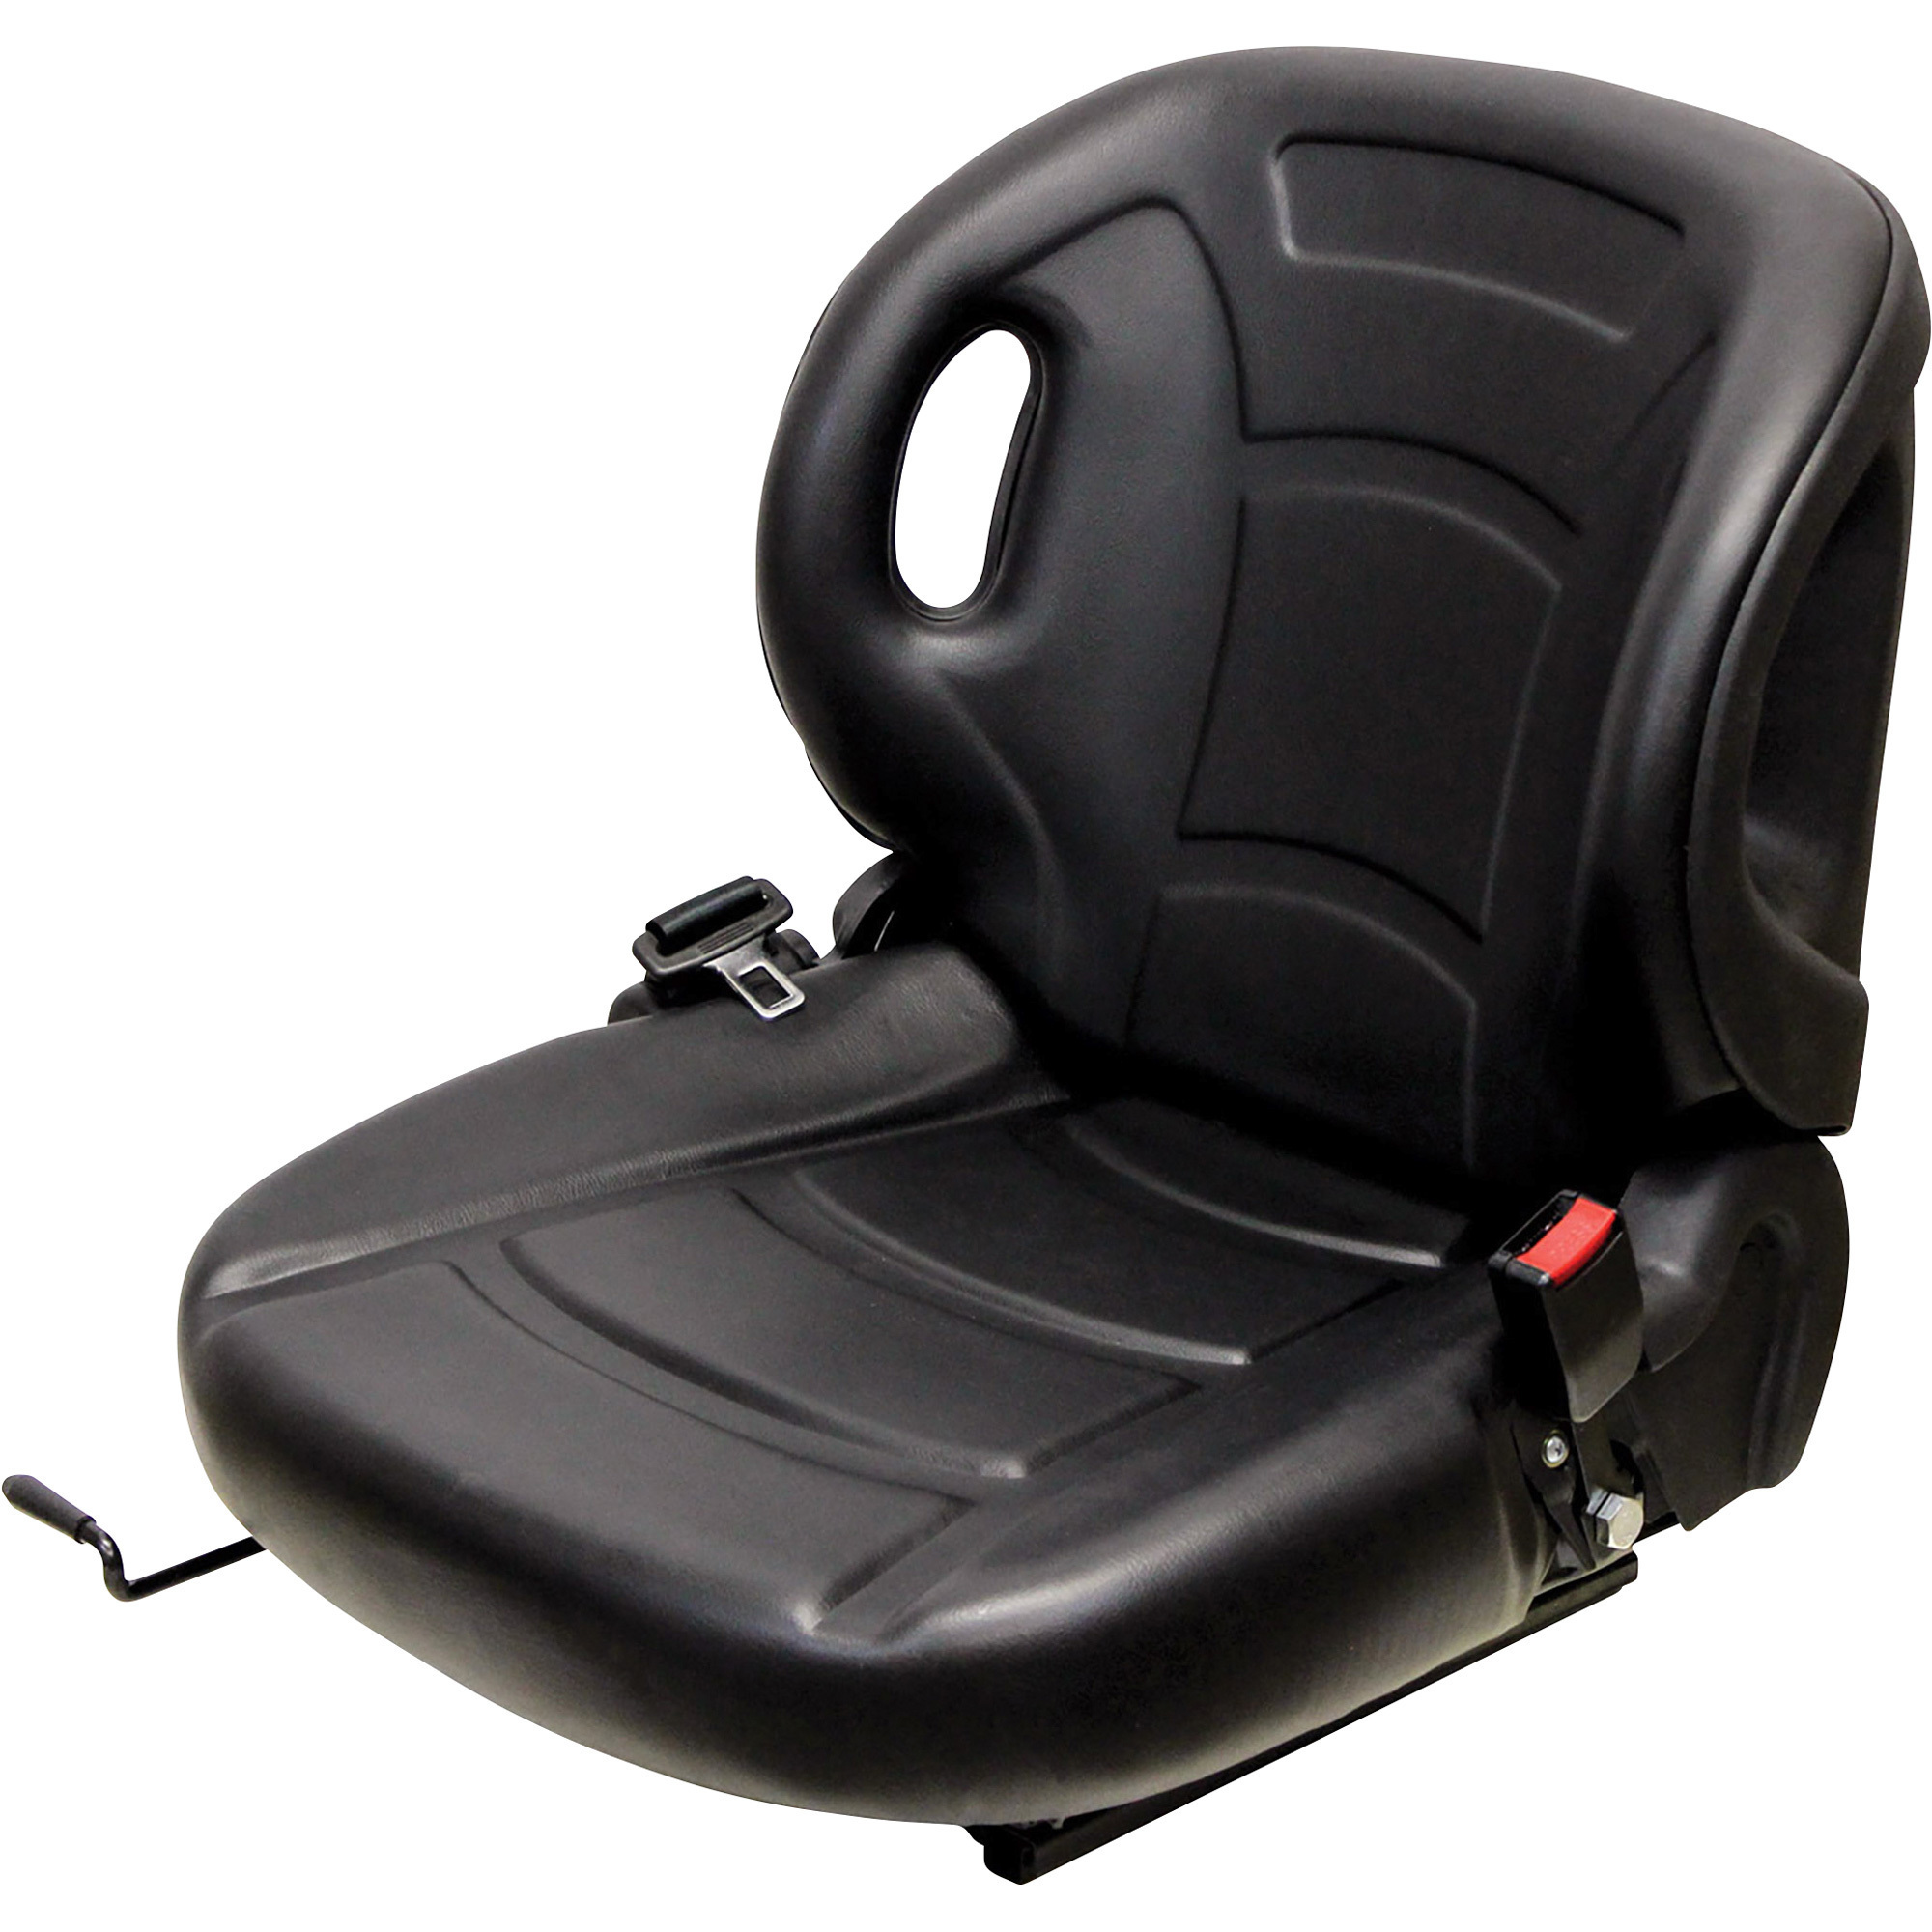 K&M Uni Pro KM 53 Forklift Seat, Black Vinyl, Model 8548